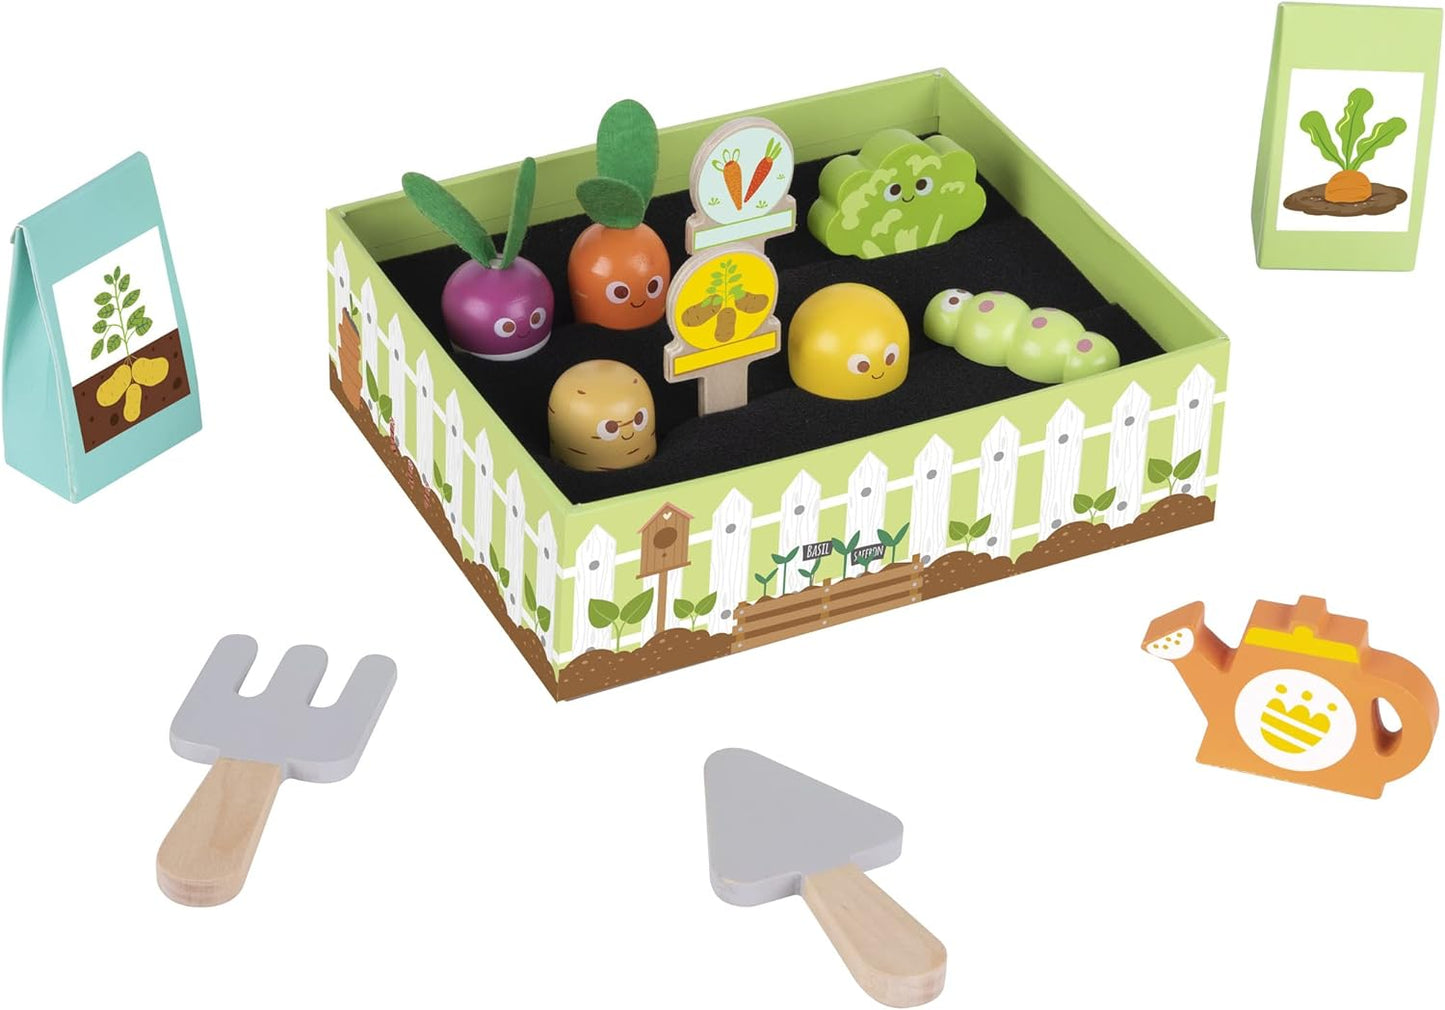 Wooden My Little Veg Garden - 14 Piece Pretend Playset by Tooky Toy 